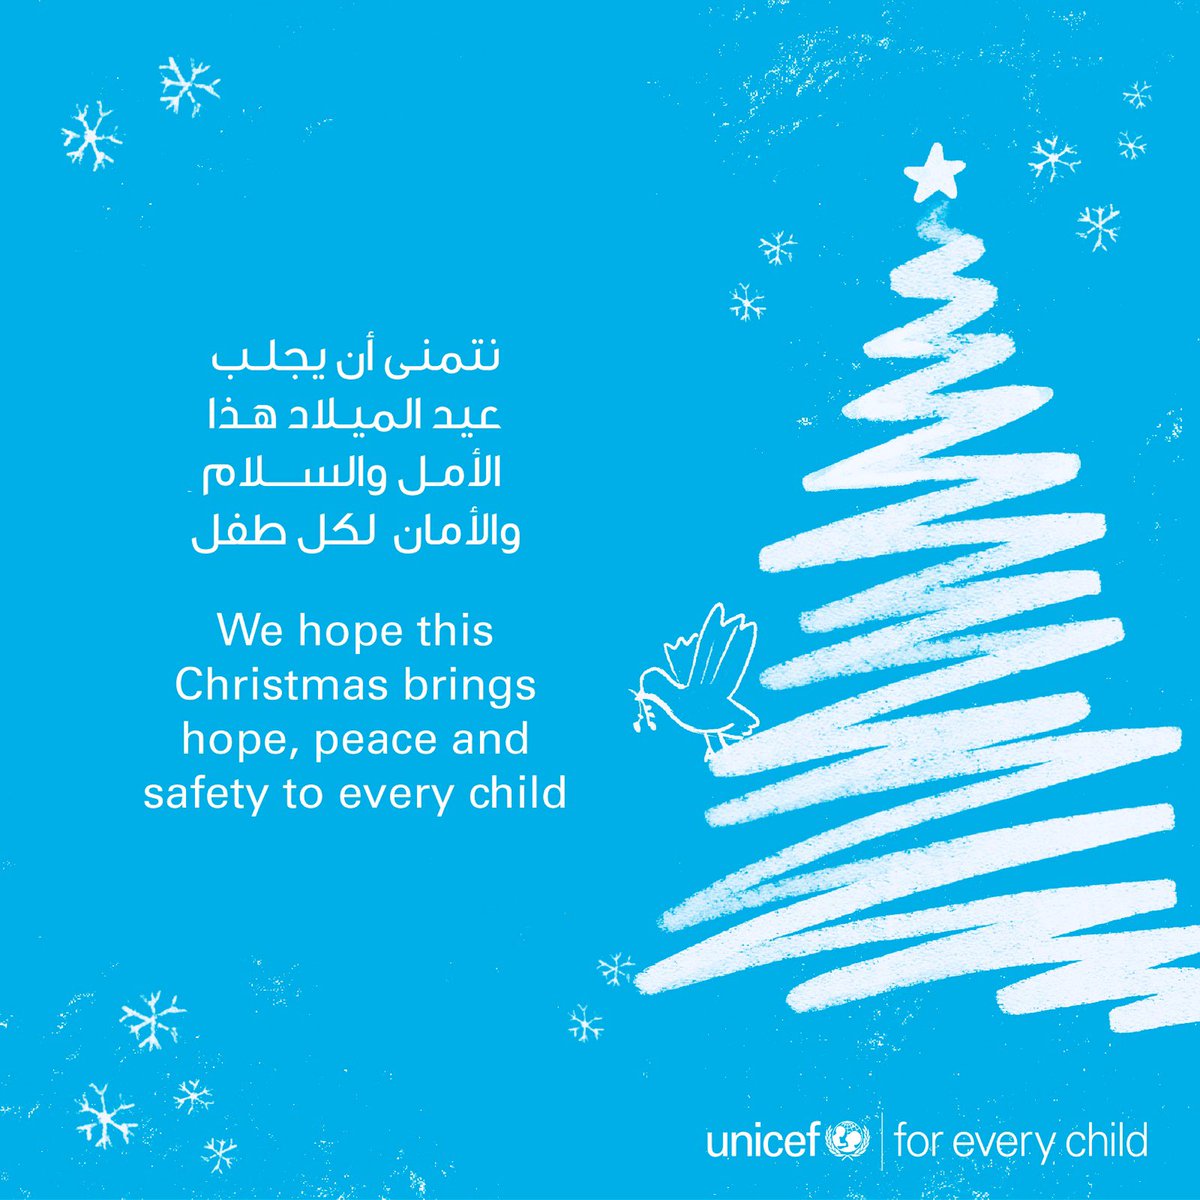 نتمنى أن يجلب عيد الميلاد الأمل والسلام والأمان #لكل_طفل

May this Christmas bring hope, peace and safety to #EveryChild